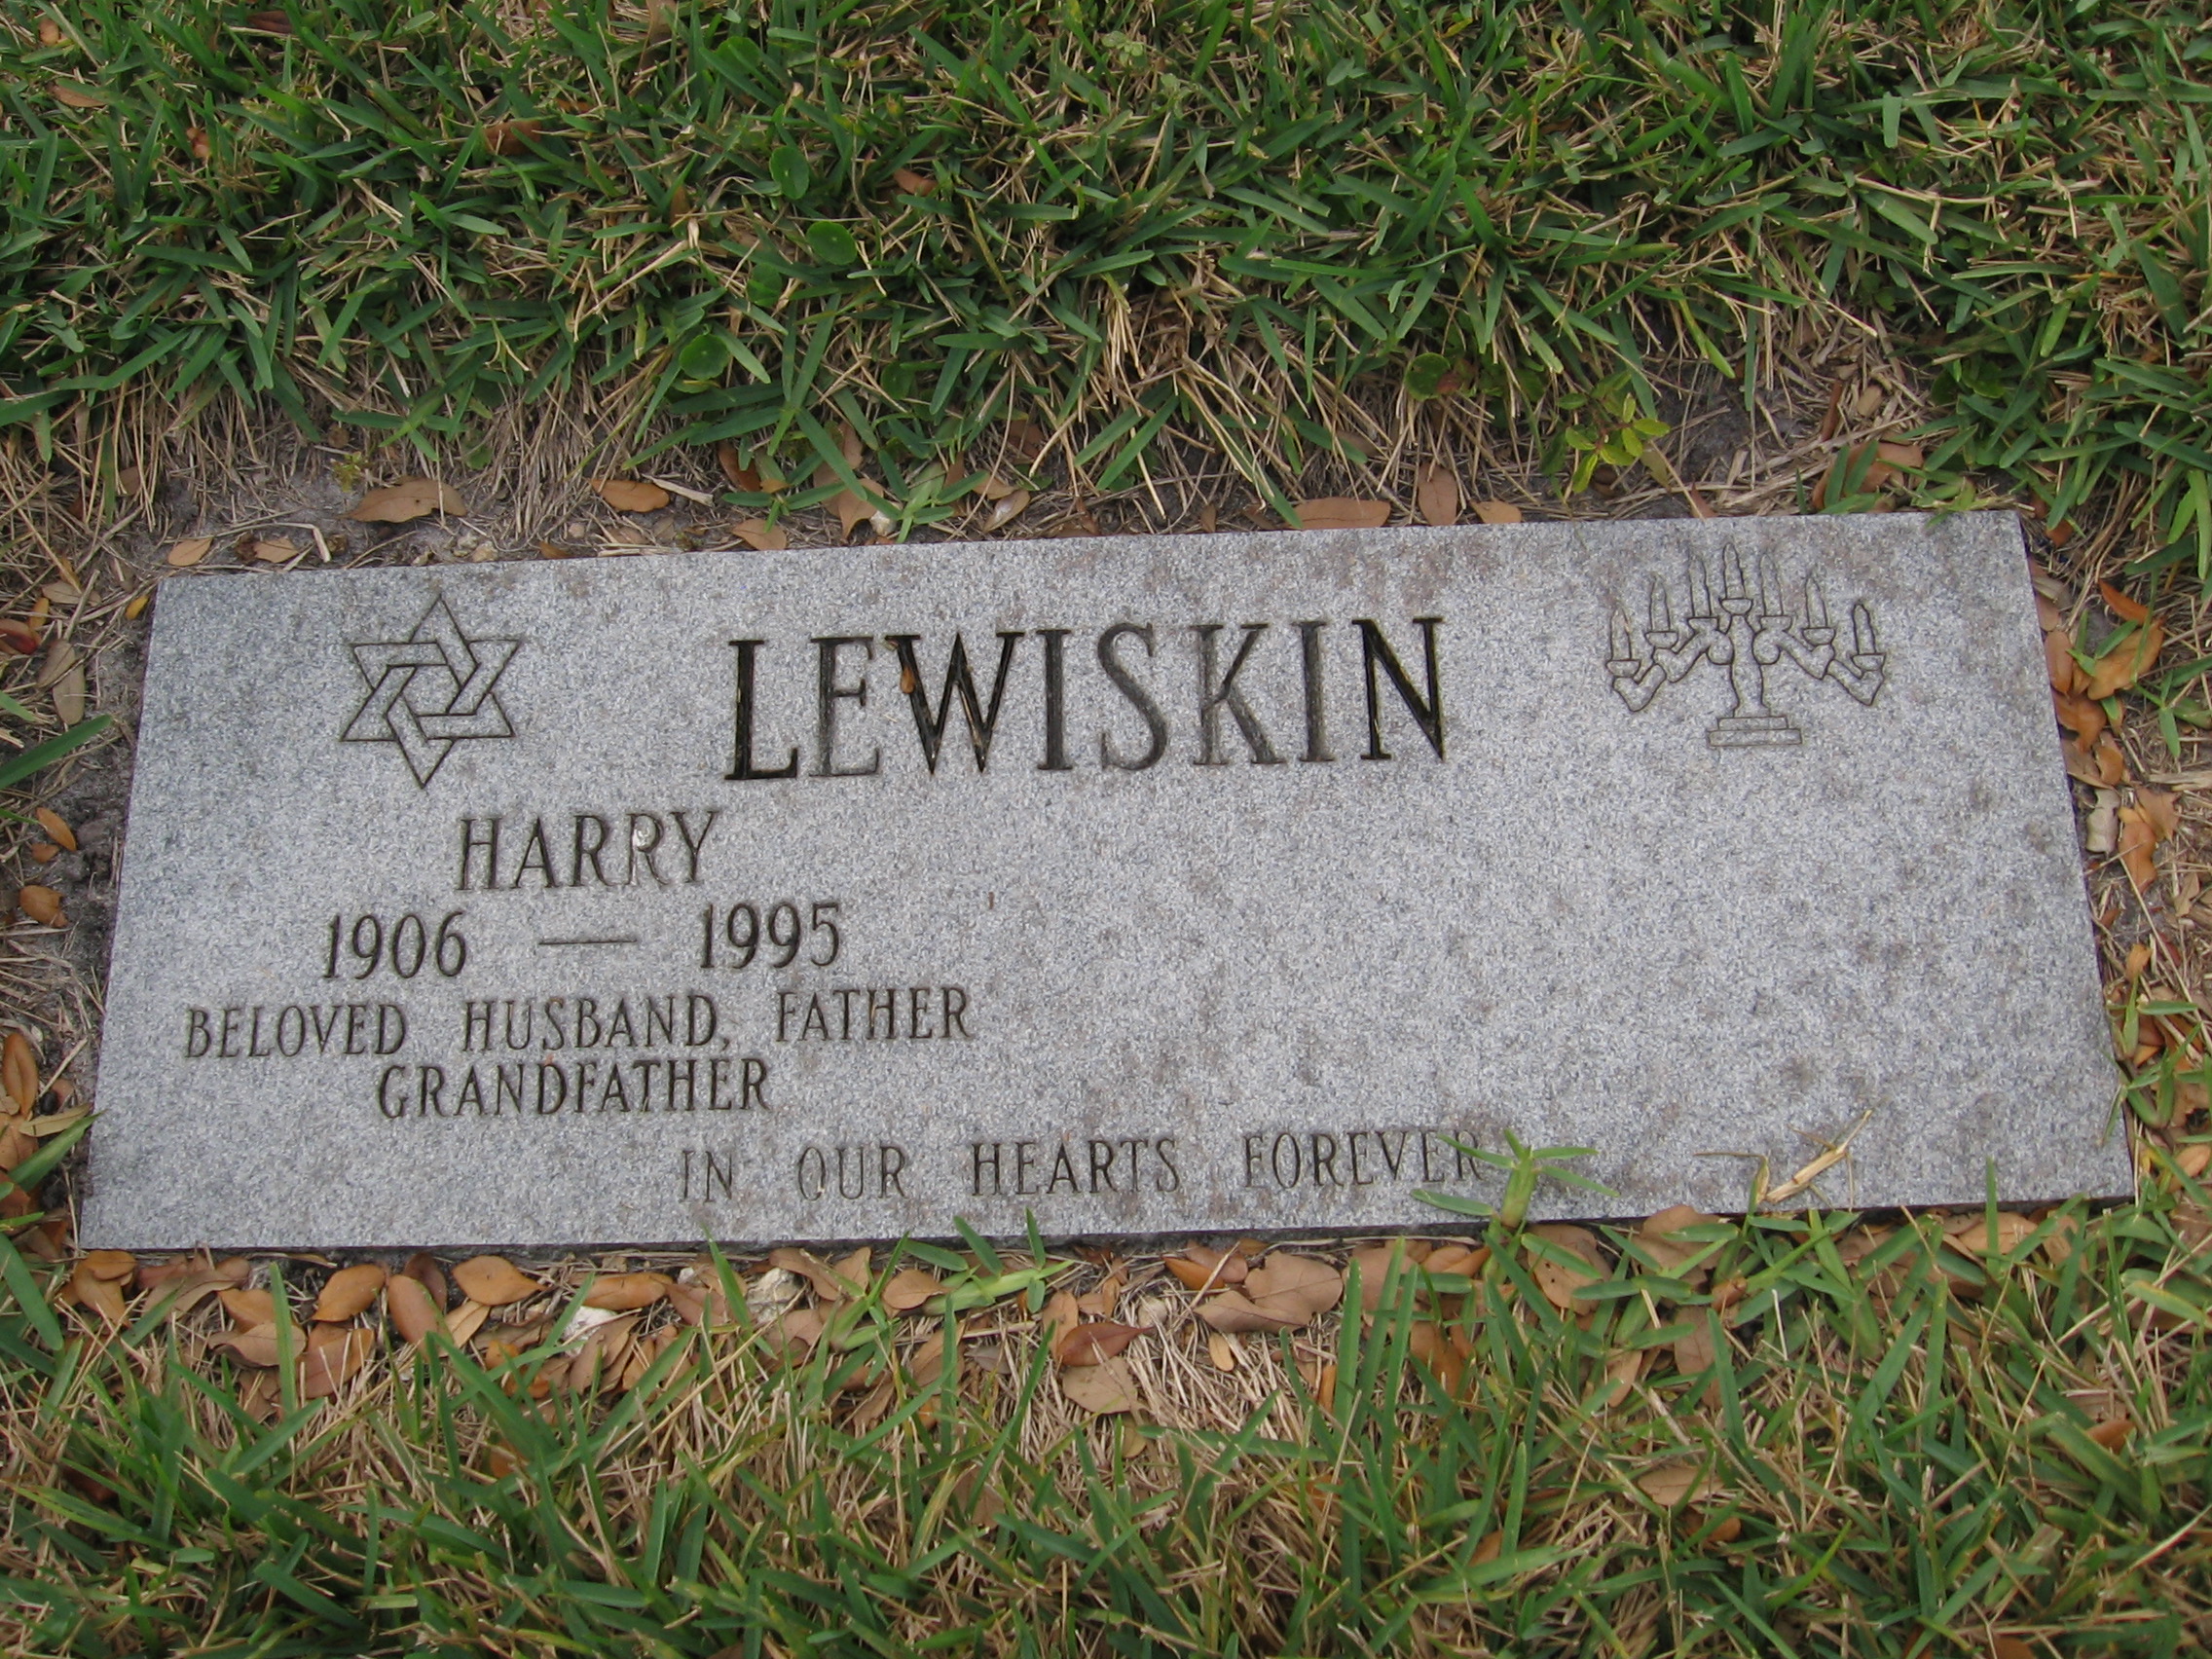 Harry Lewiskin